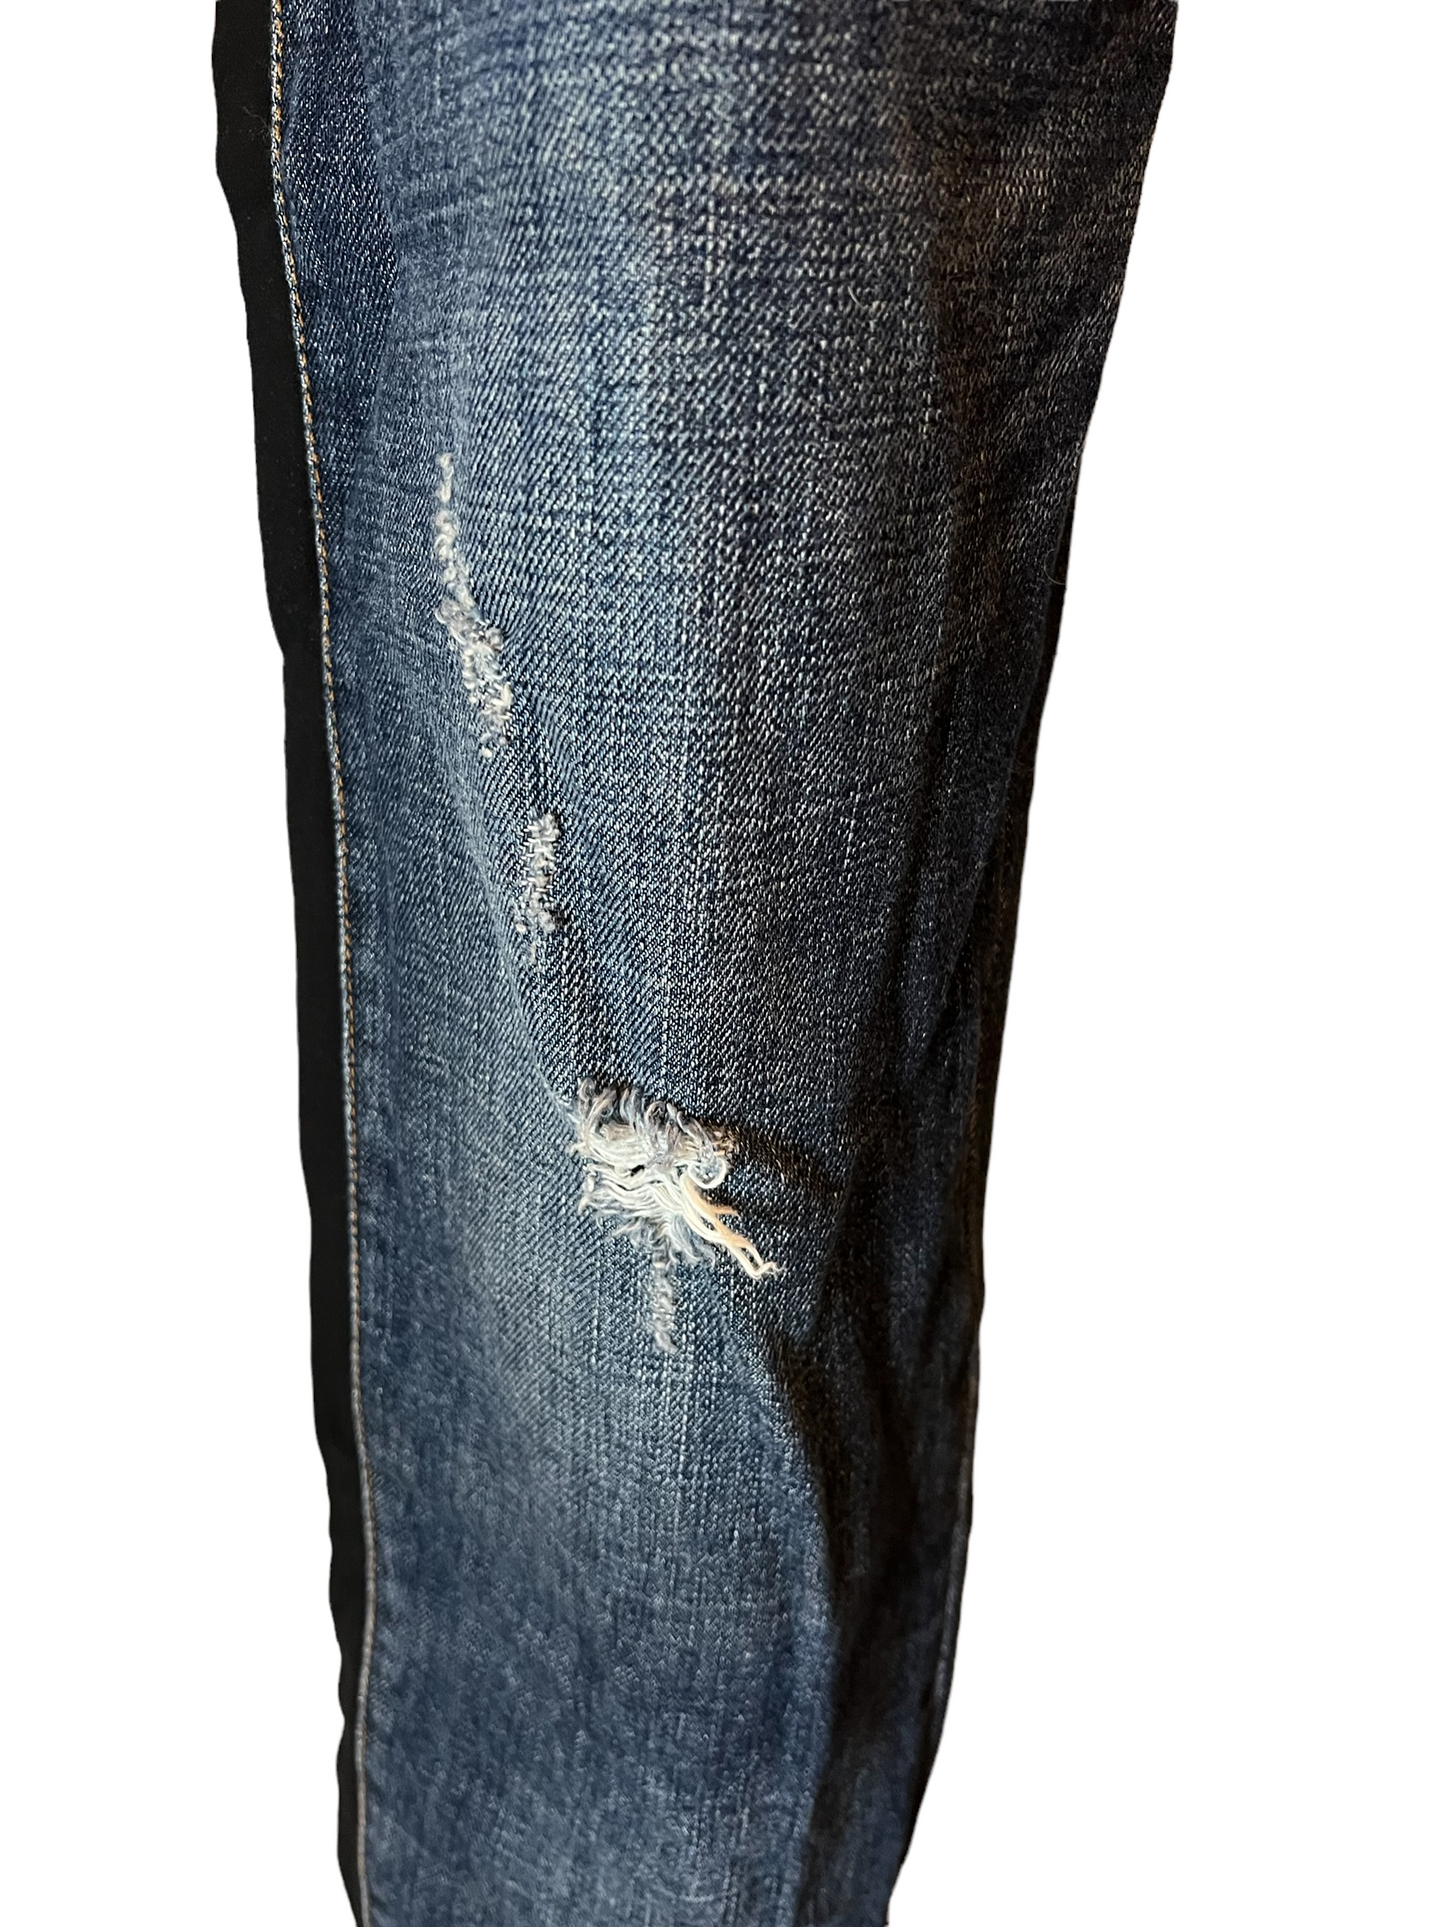 Dolce & Gabbana Distressed Grosgrain Size 46 Jeans